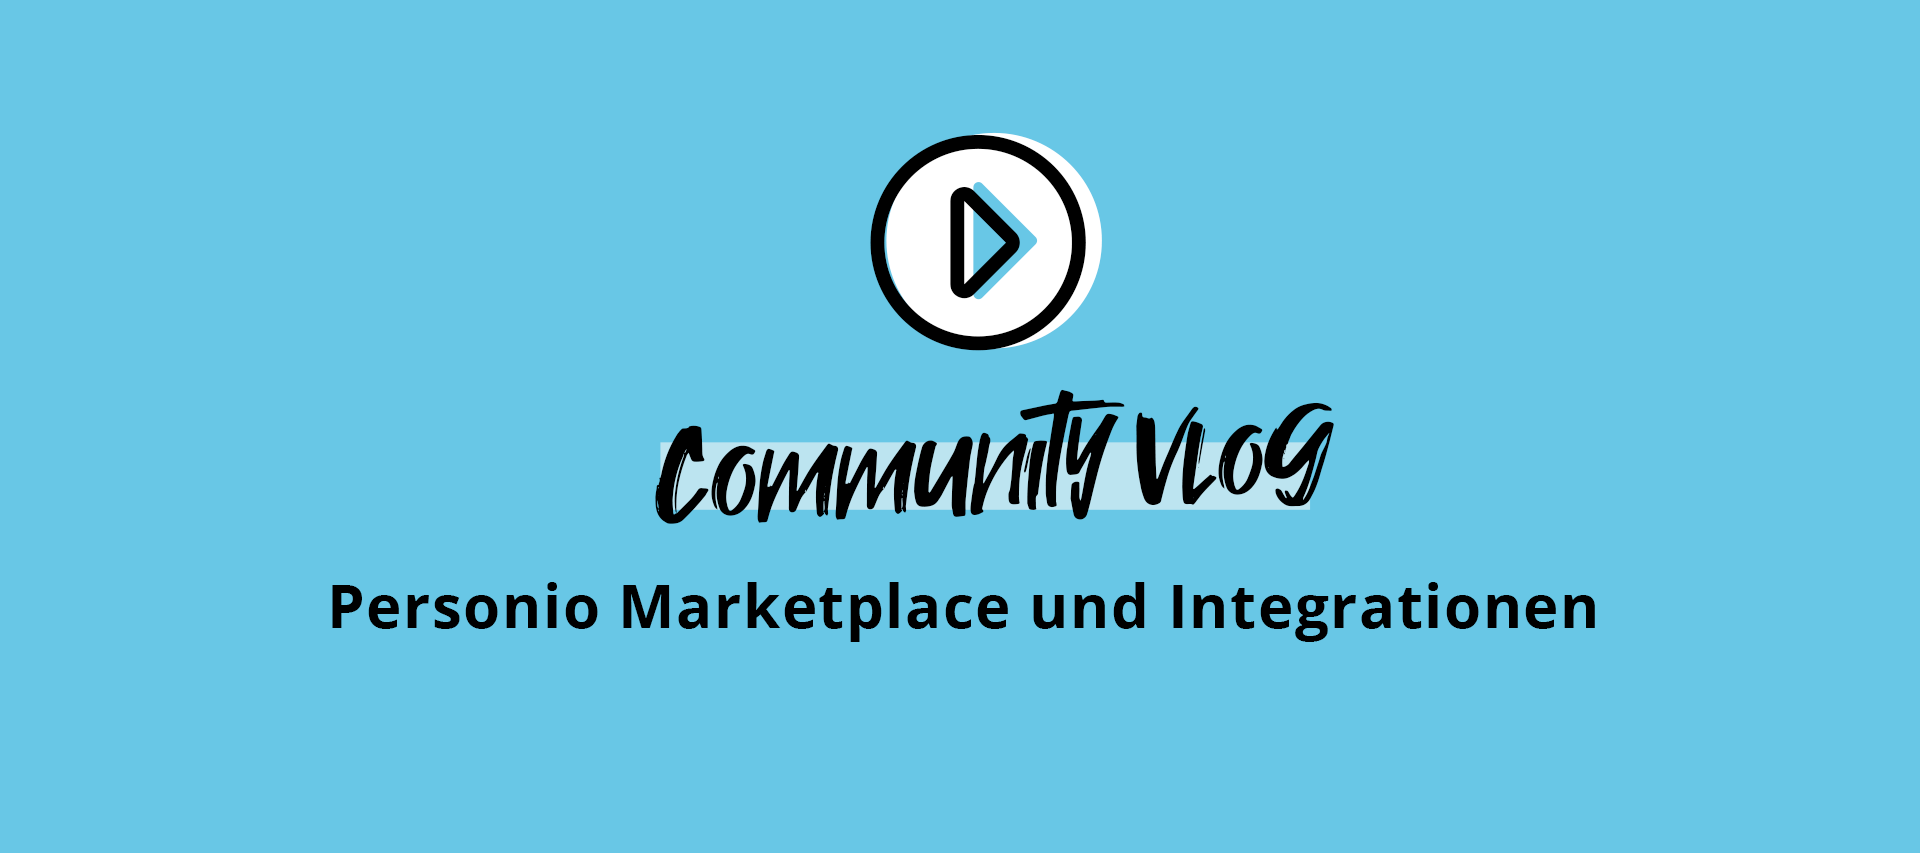 Personio Community Vlog - Marketplace und Integrationen (DE)